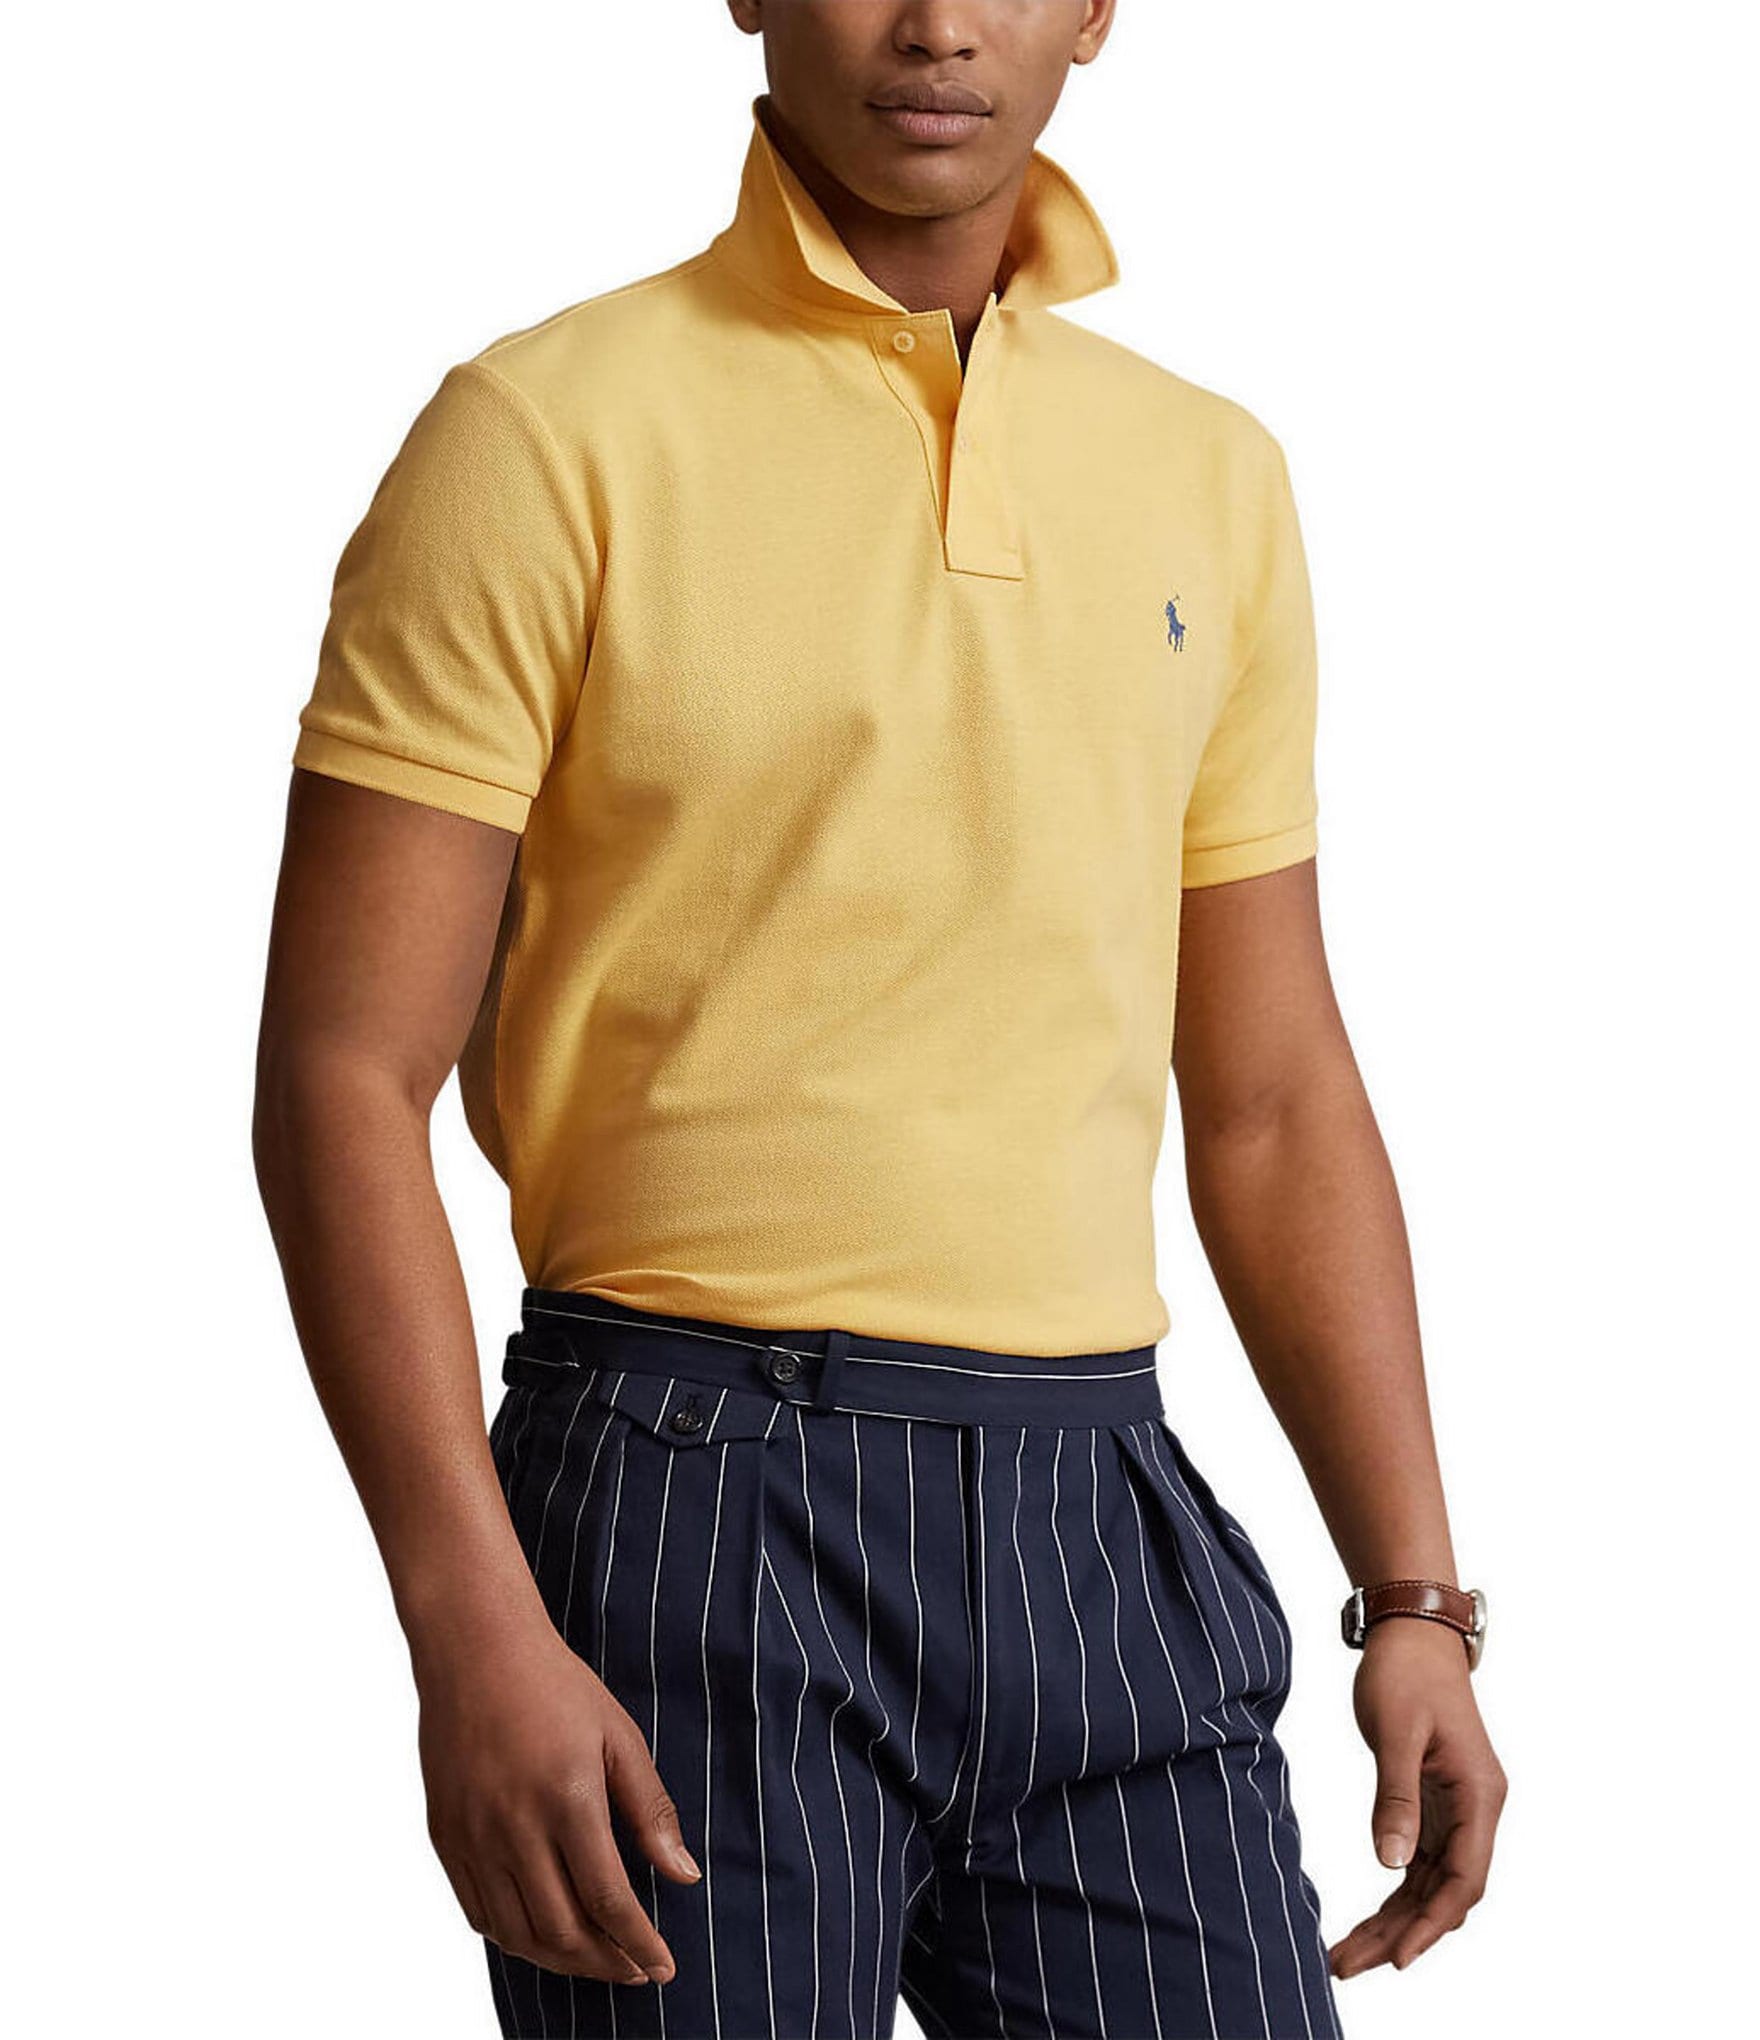  Red Bandana Pattern Printed Men's Polo Short Sleeve T-Shirt  Classic Standard-Fit Shirt : Sports & Outdoors